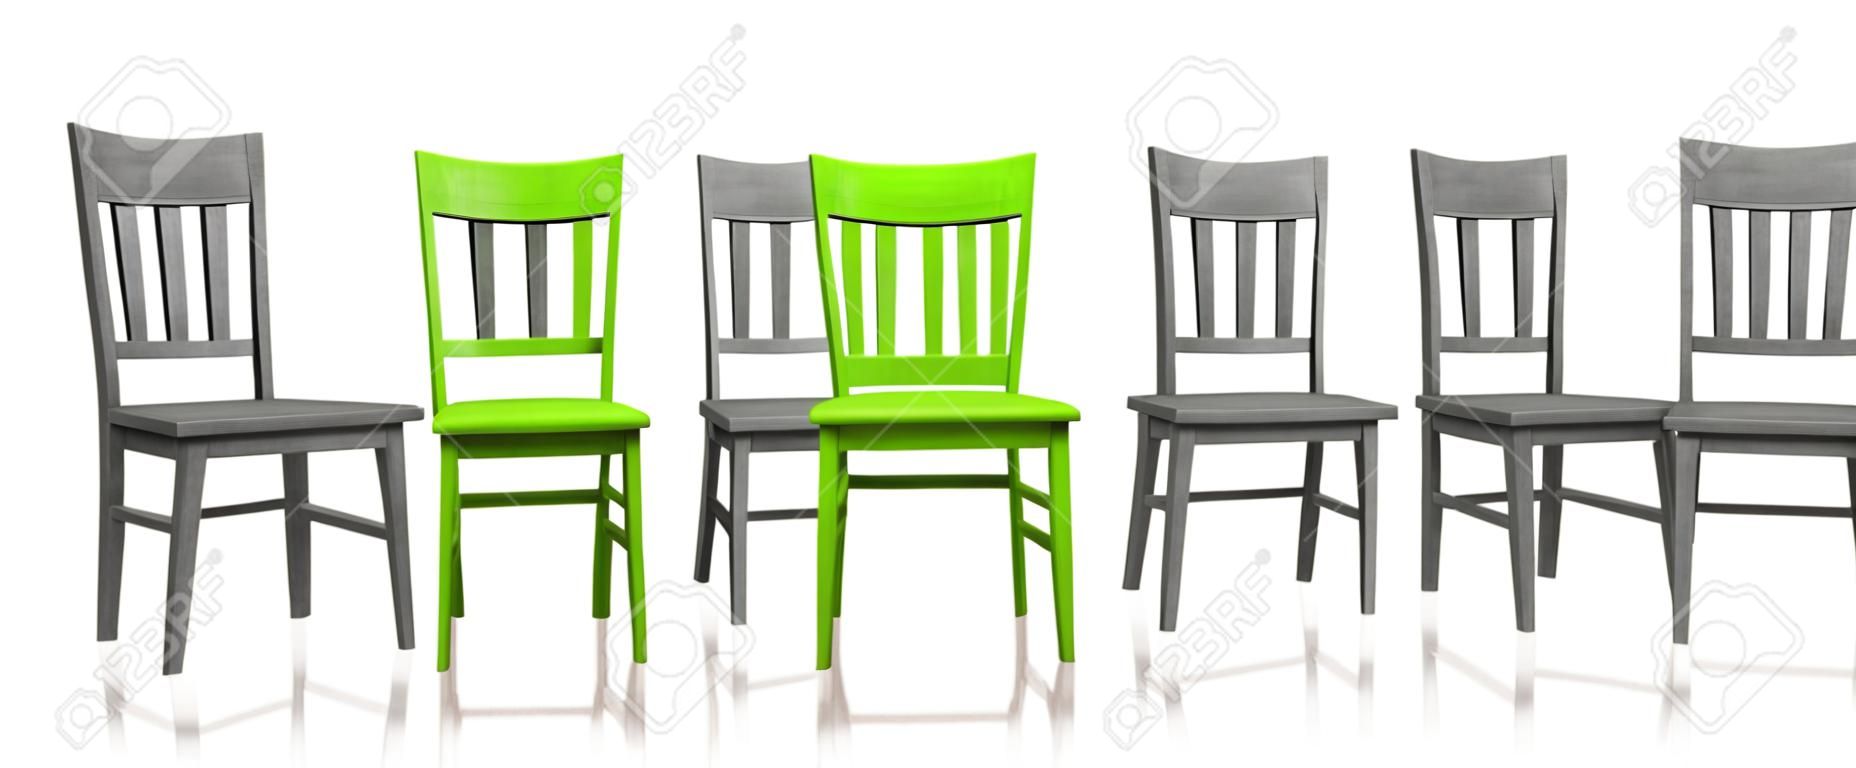 La fila de sillas 3D - verde-gris